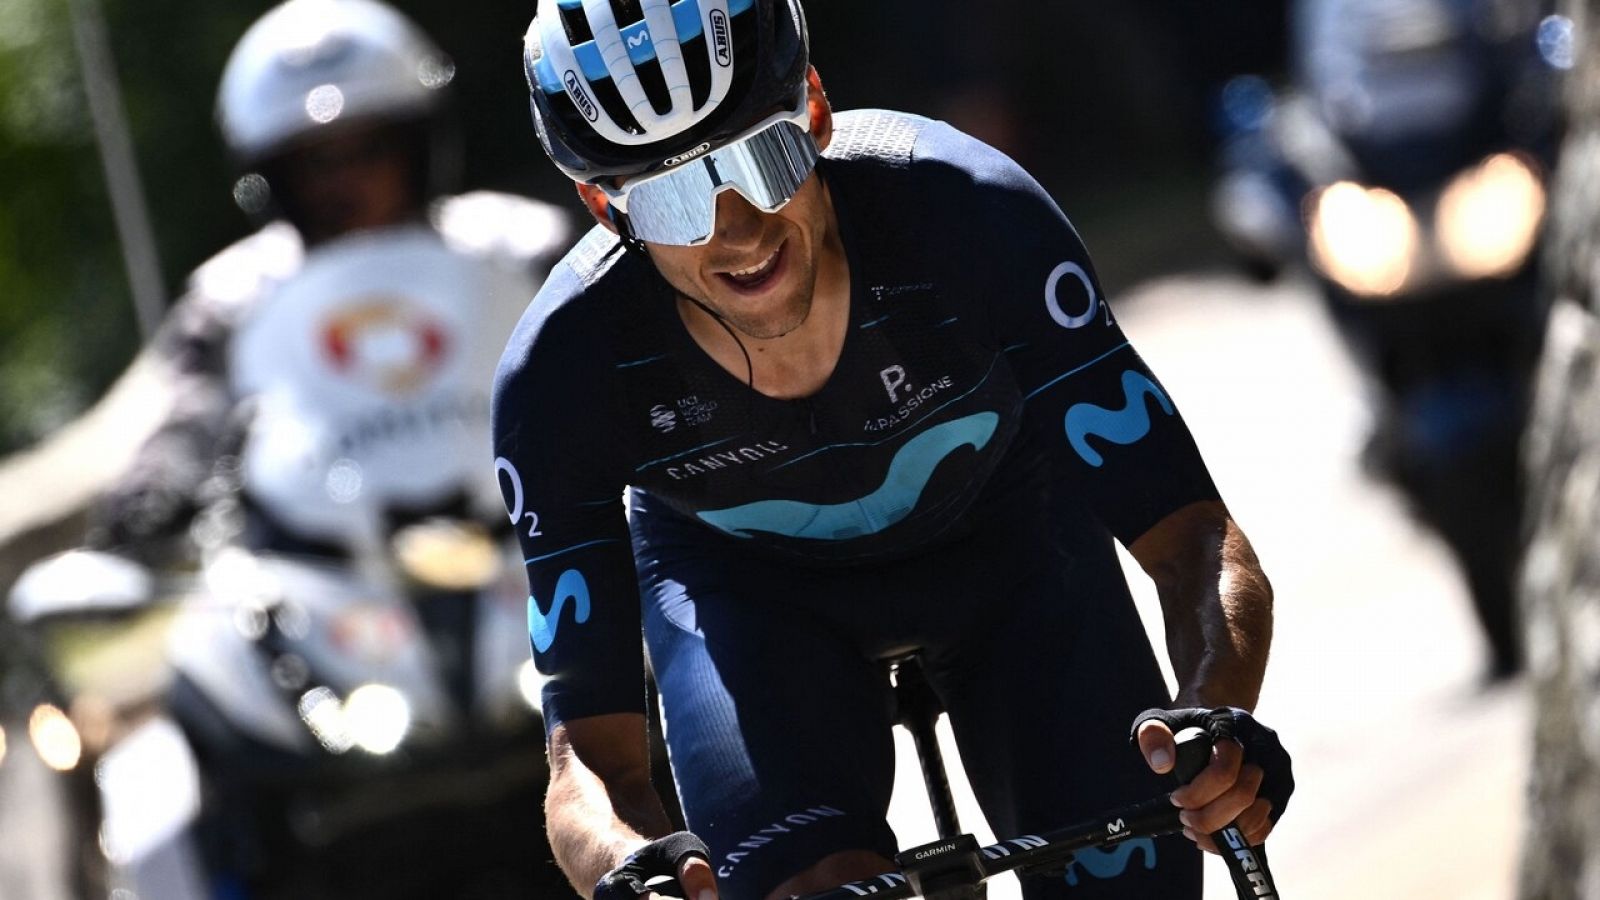 Carlos Verona gana la etapa reina de la Dauphiné